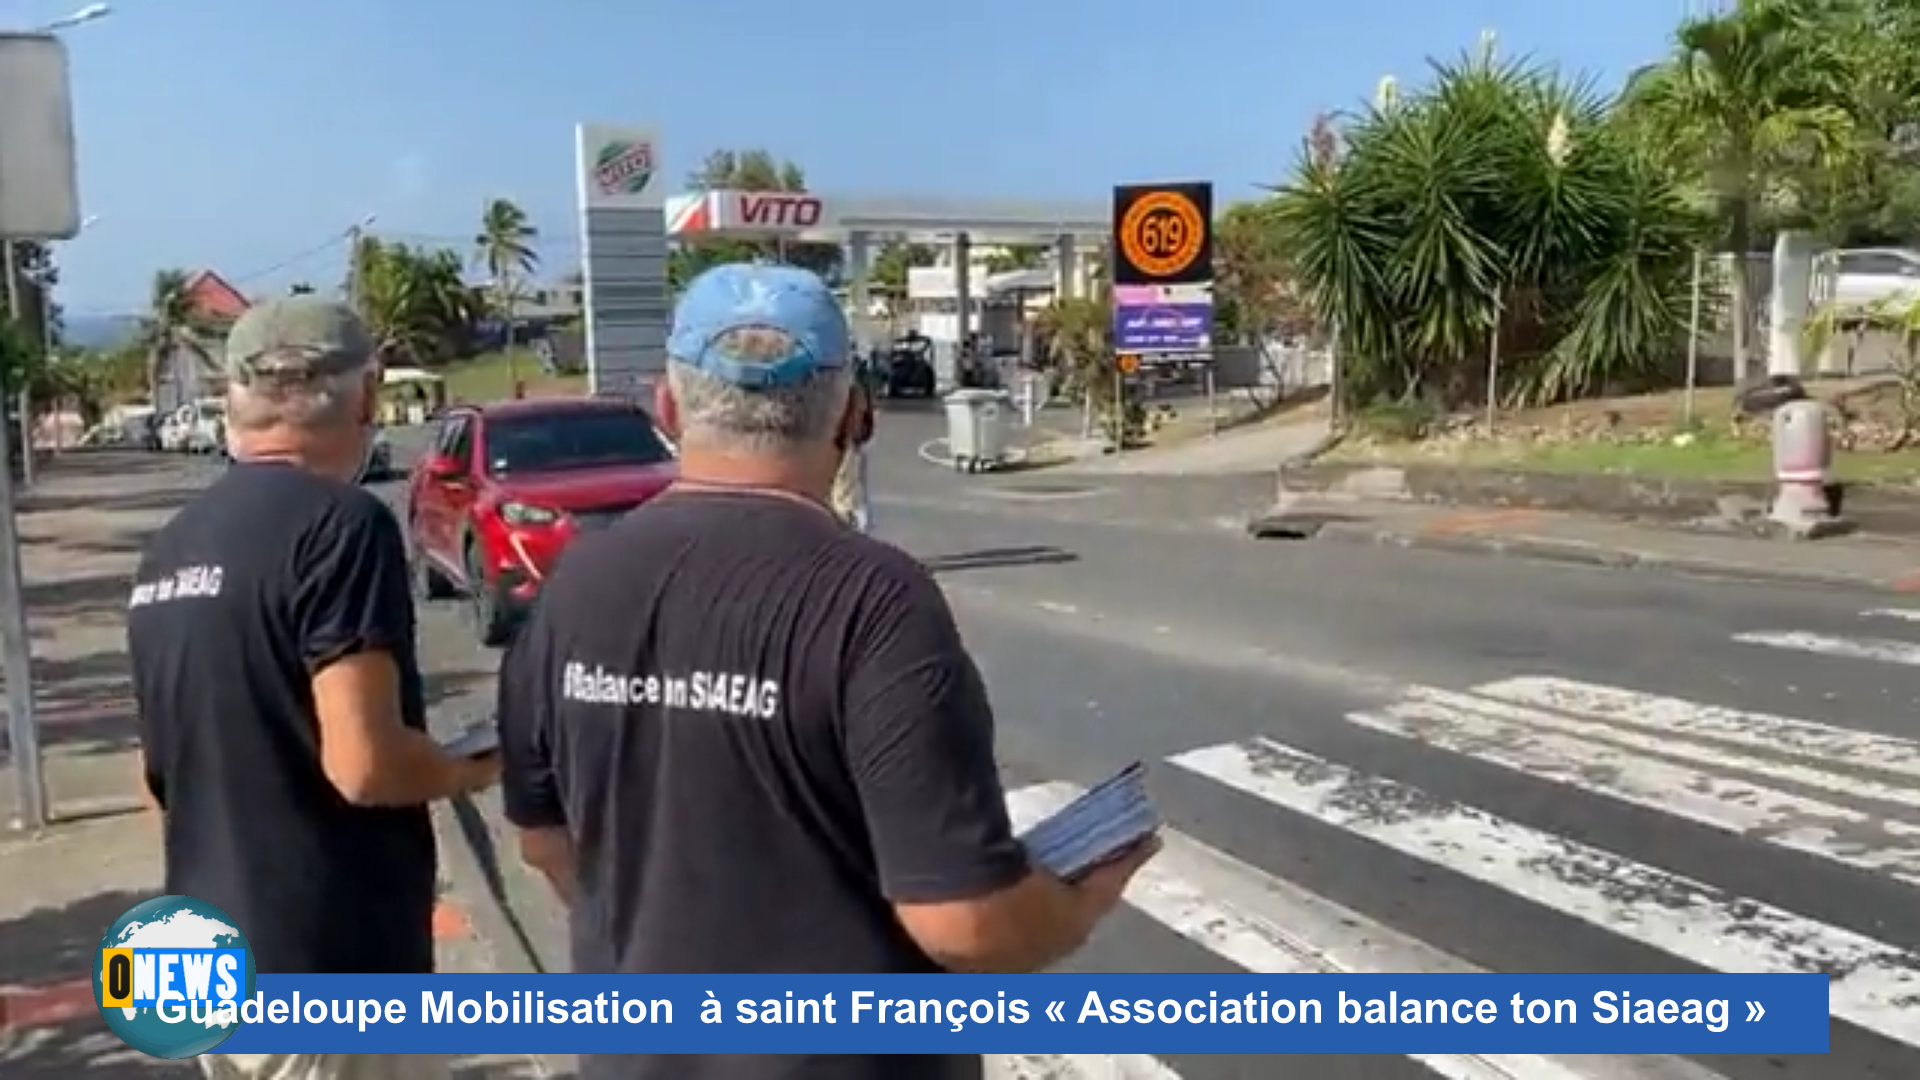 Onews Guadeloupe. Mobilisation « Association balance ton Siaeag »